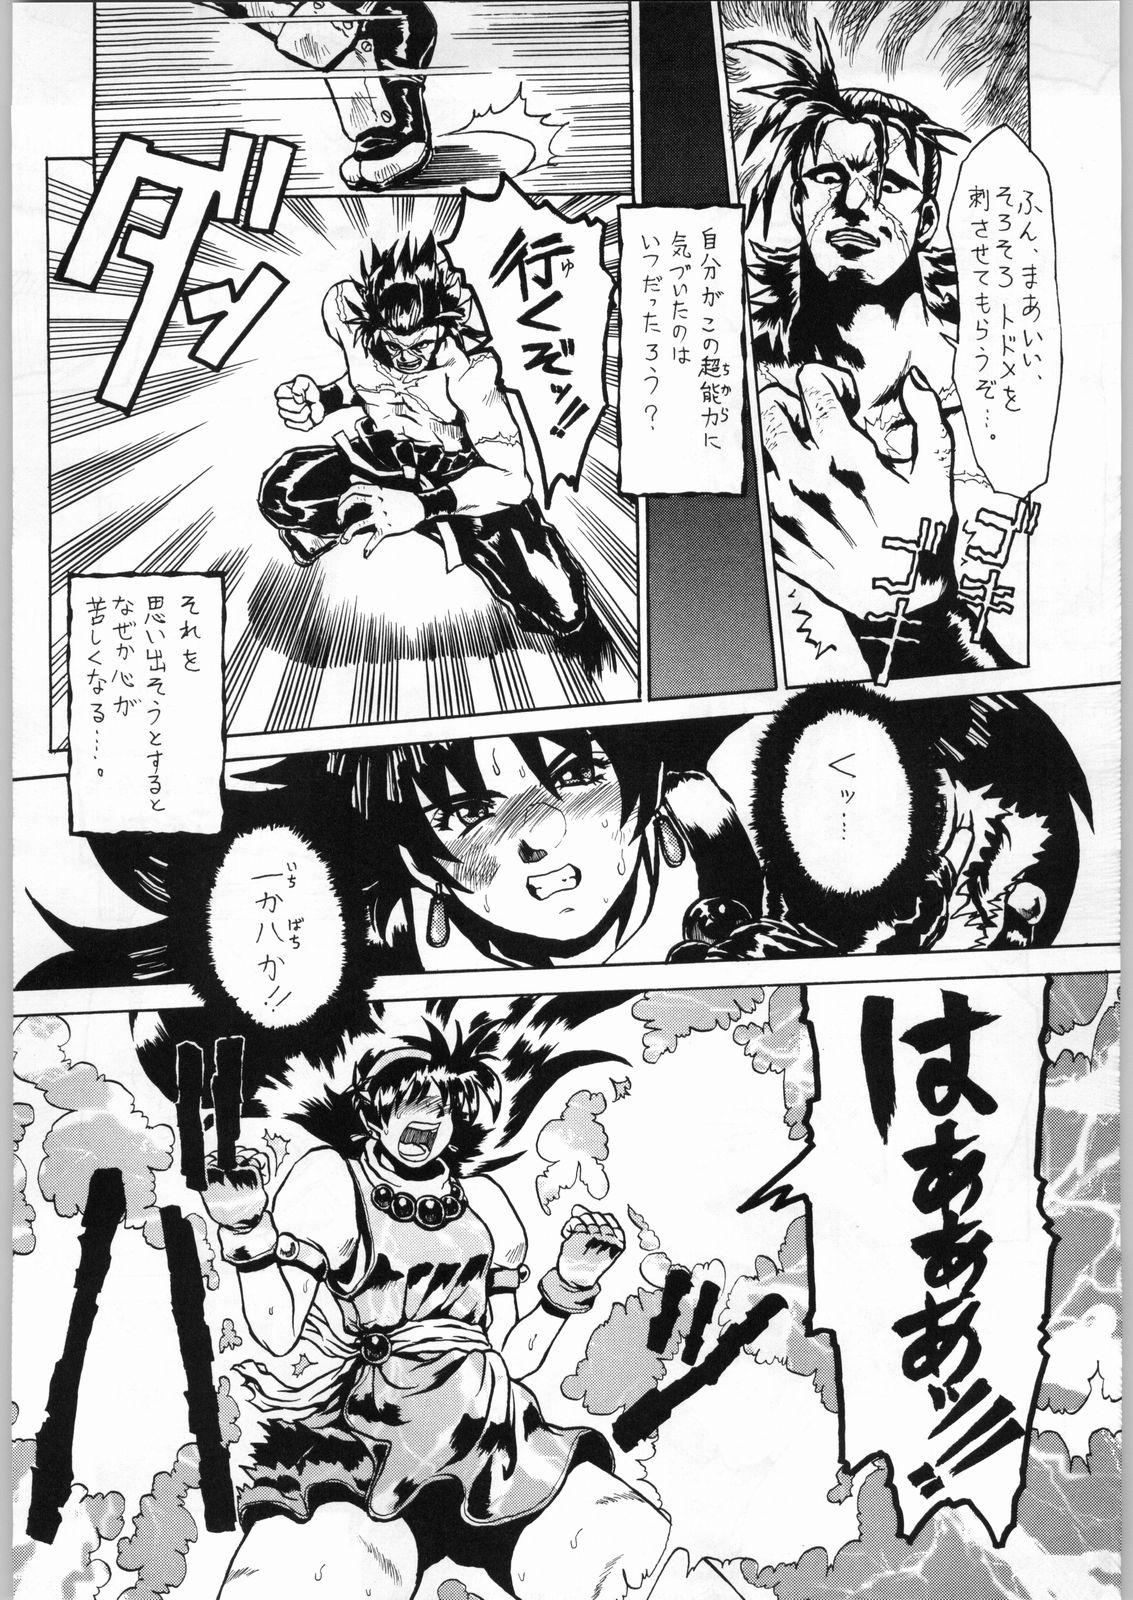 Hunks Shikiyoku Hokkedan 8 - King of fighters Valkyrie no bouken Breeding - Page 6